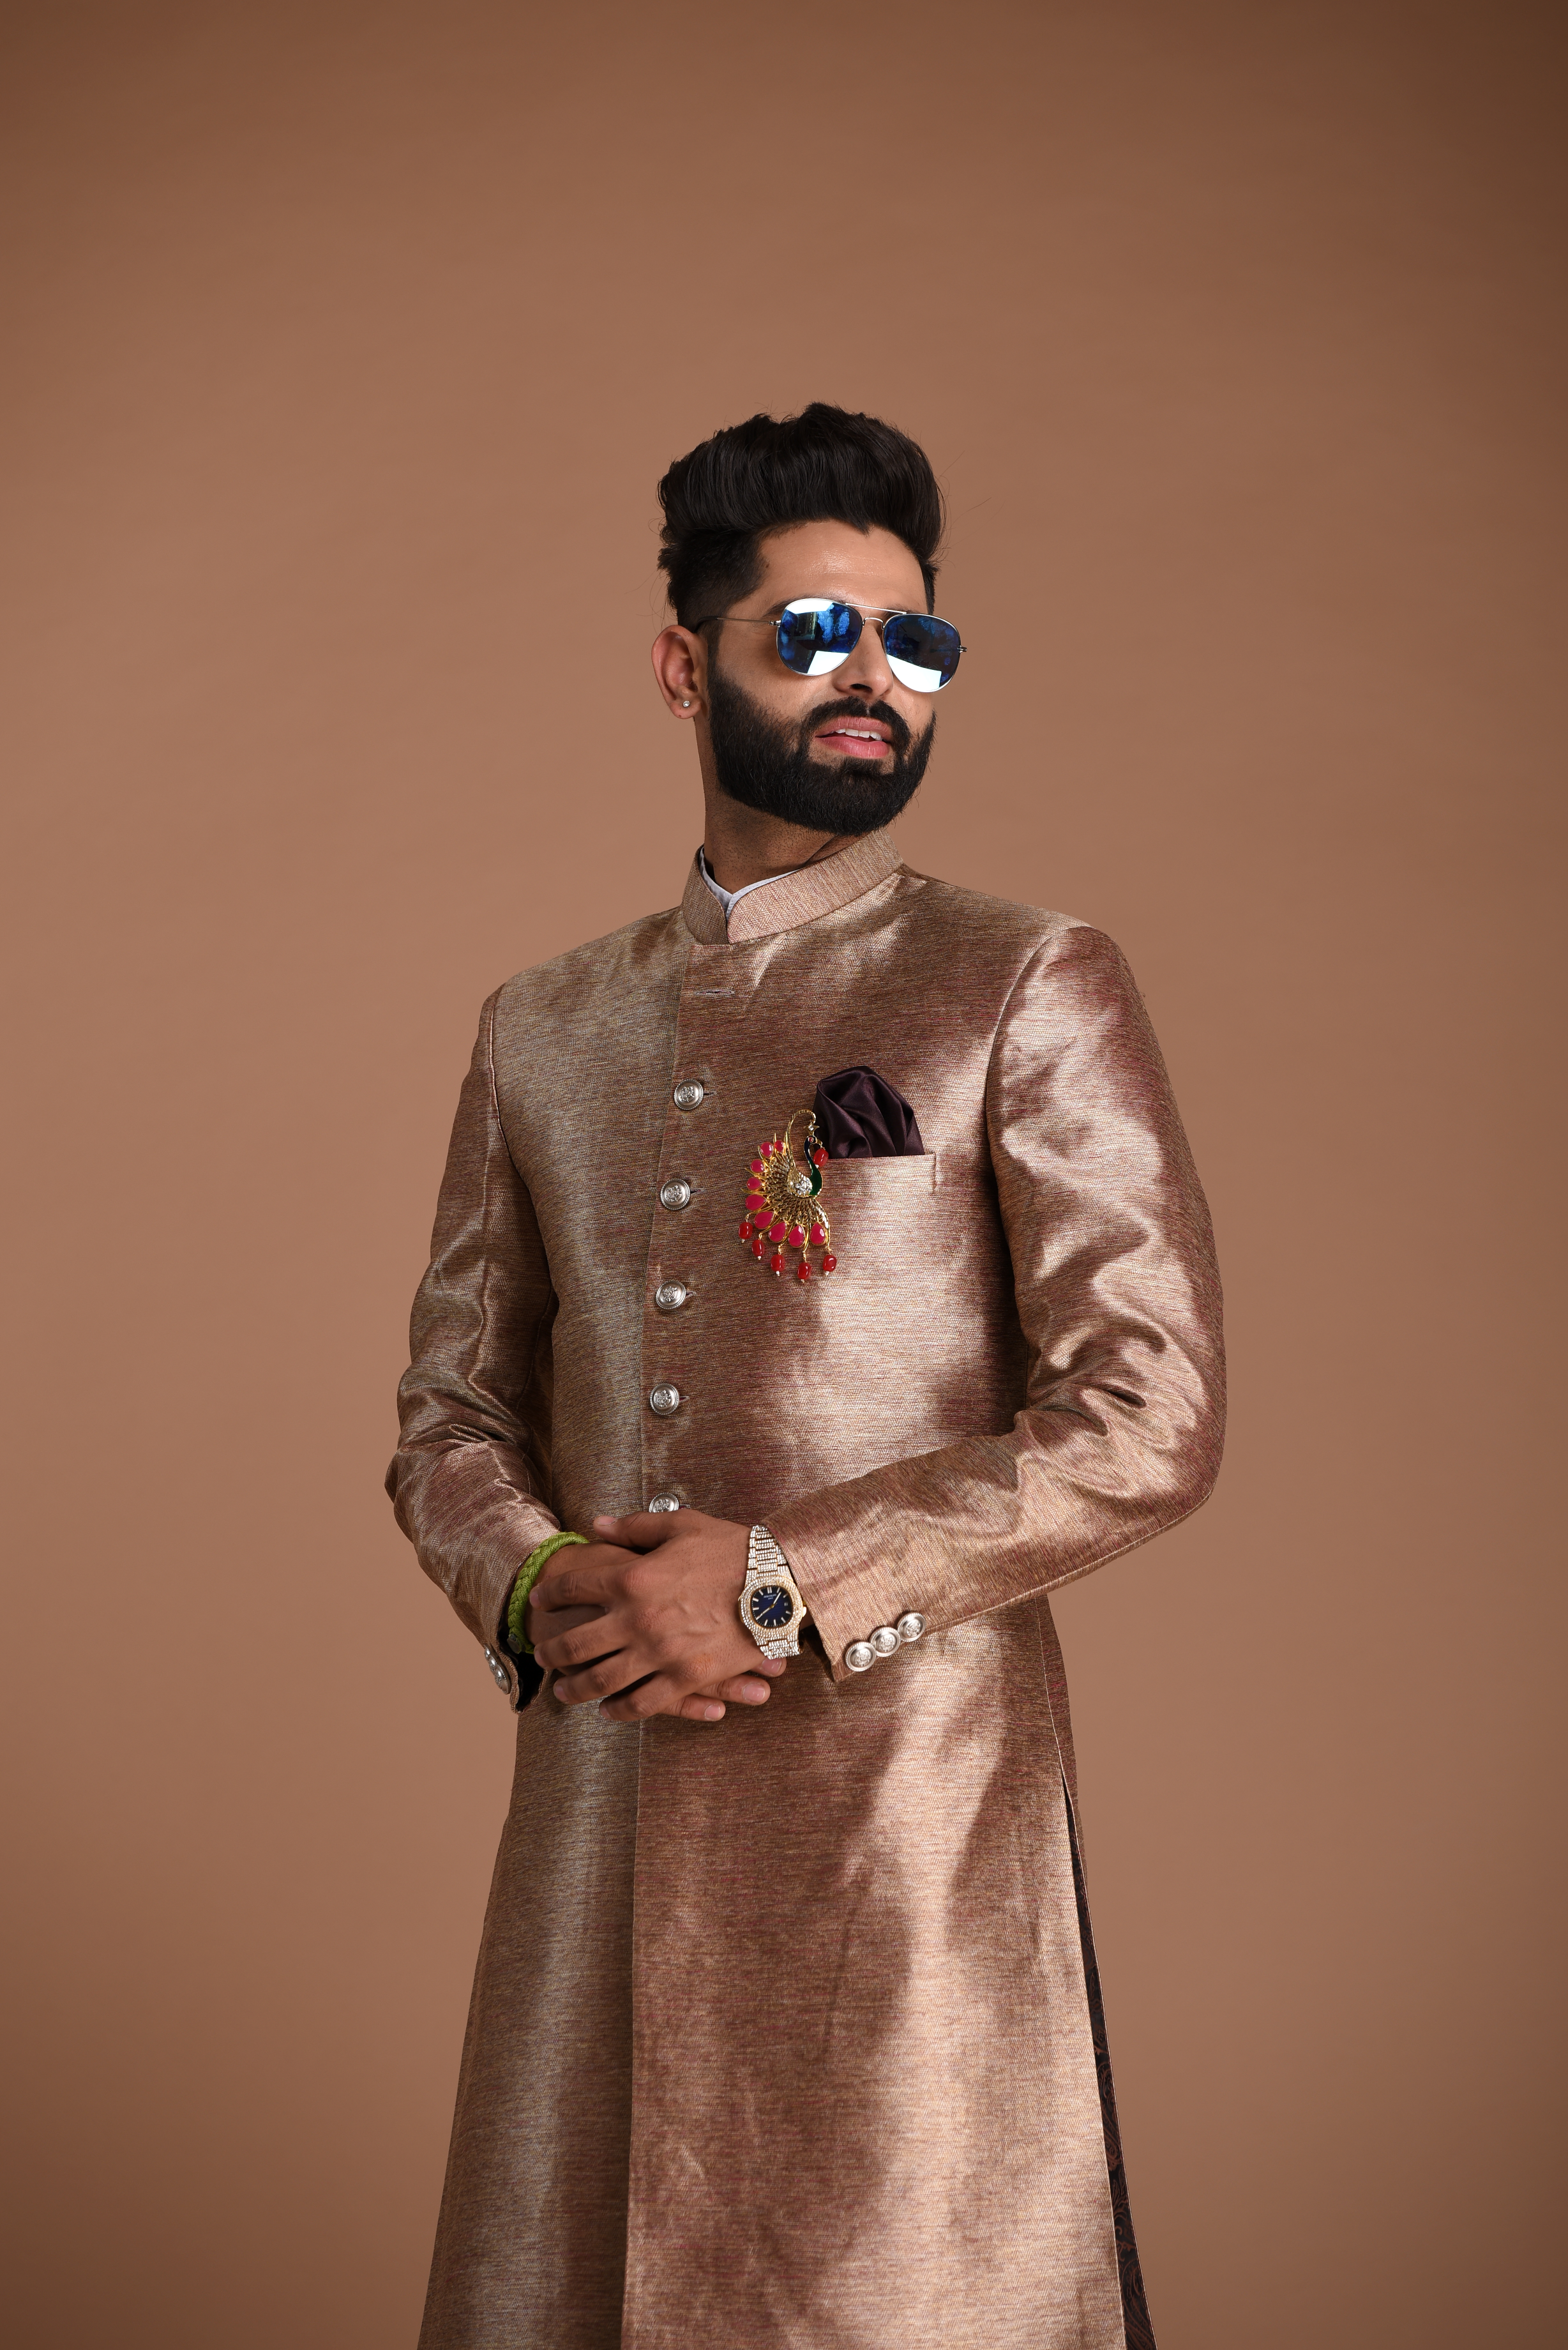 Alluring Magenta Golden Banarasi Silk Sherwani /Achkan for Men |Best For Wedding ,Grooms Formal Indian Events Festivals |Maharaja Style|